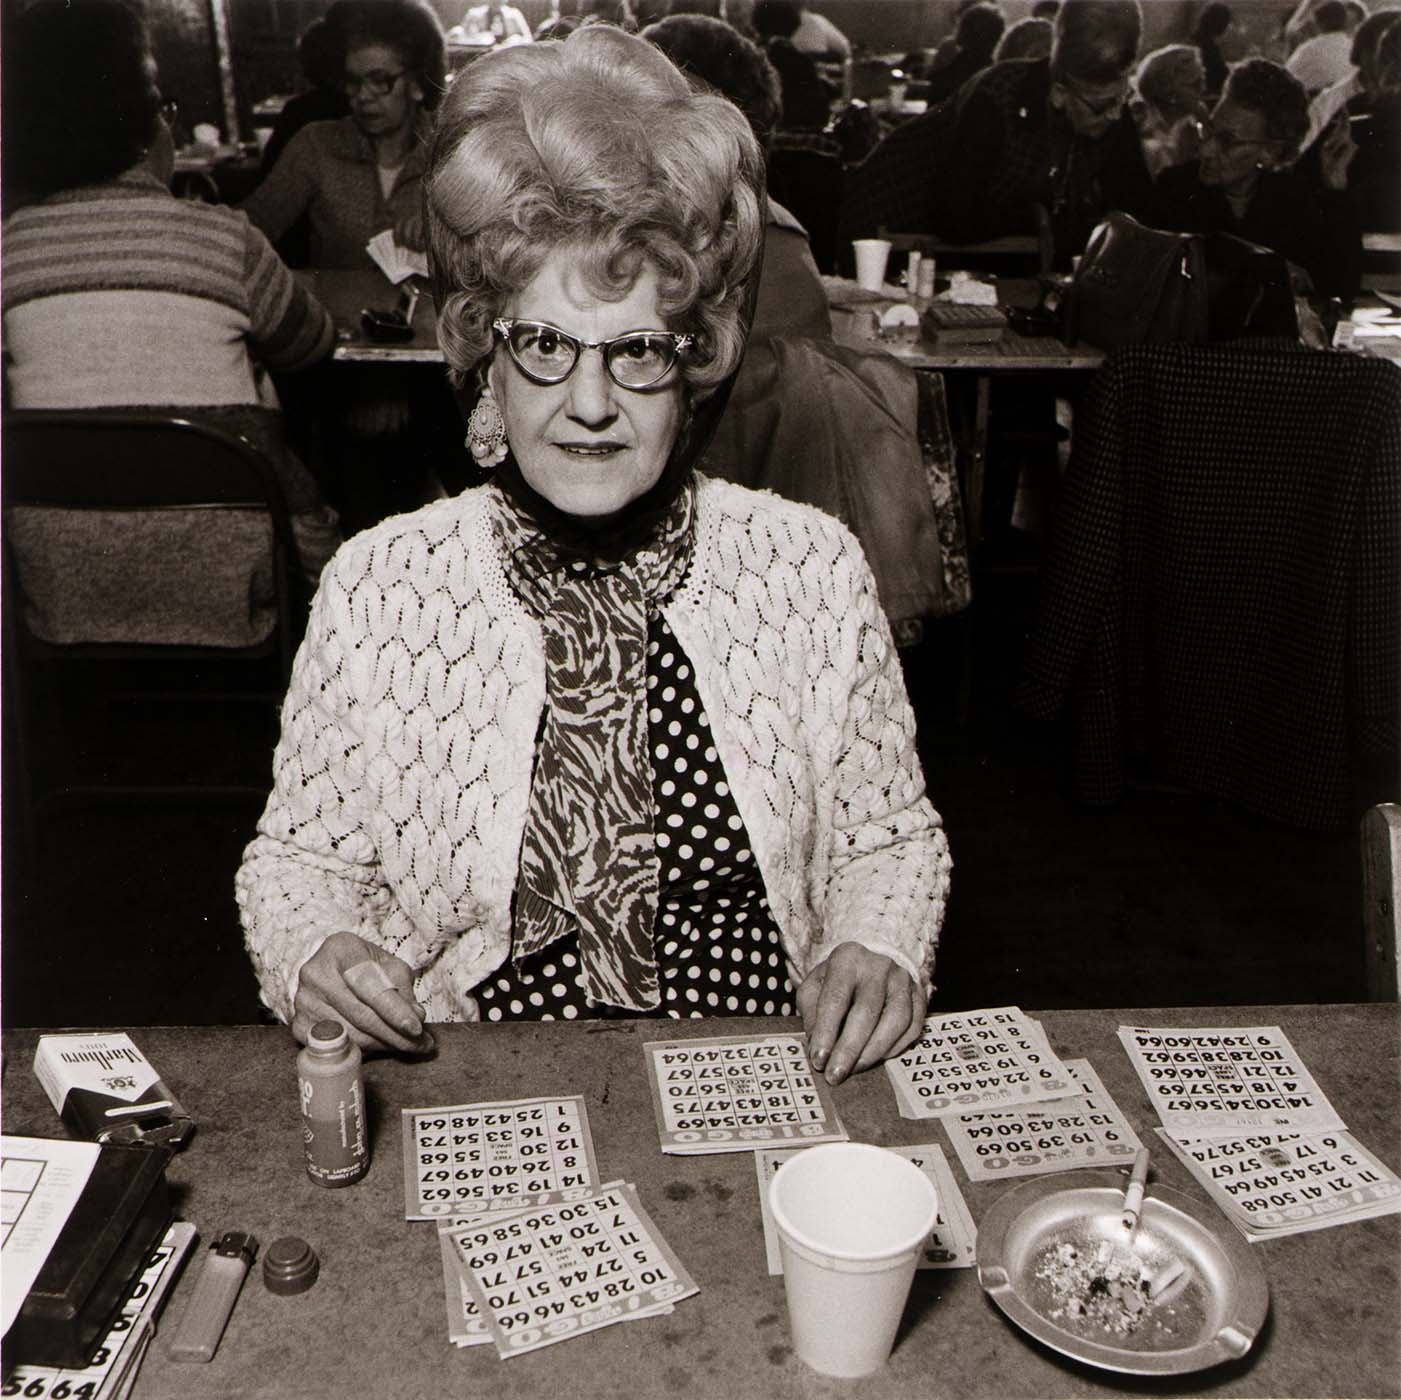 Grandma playing bingo